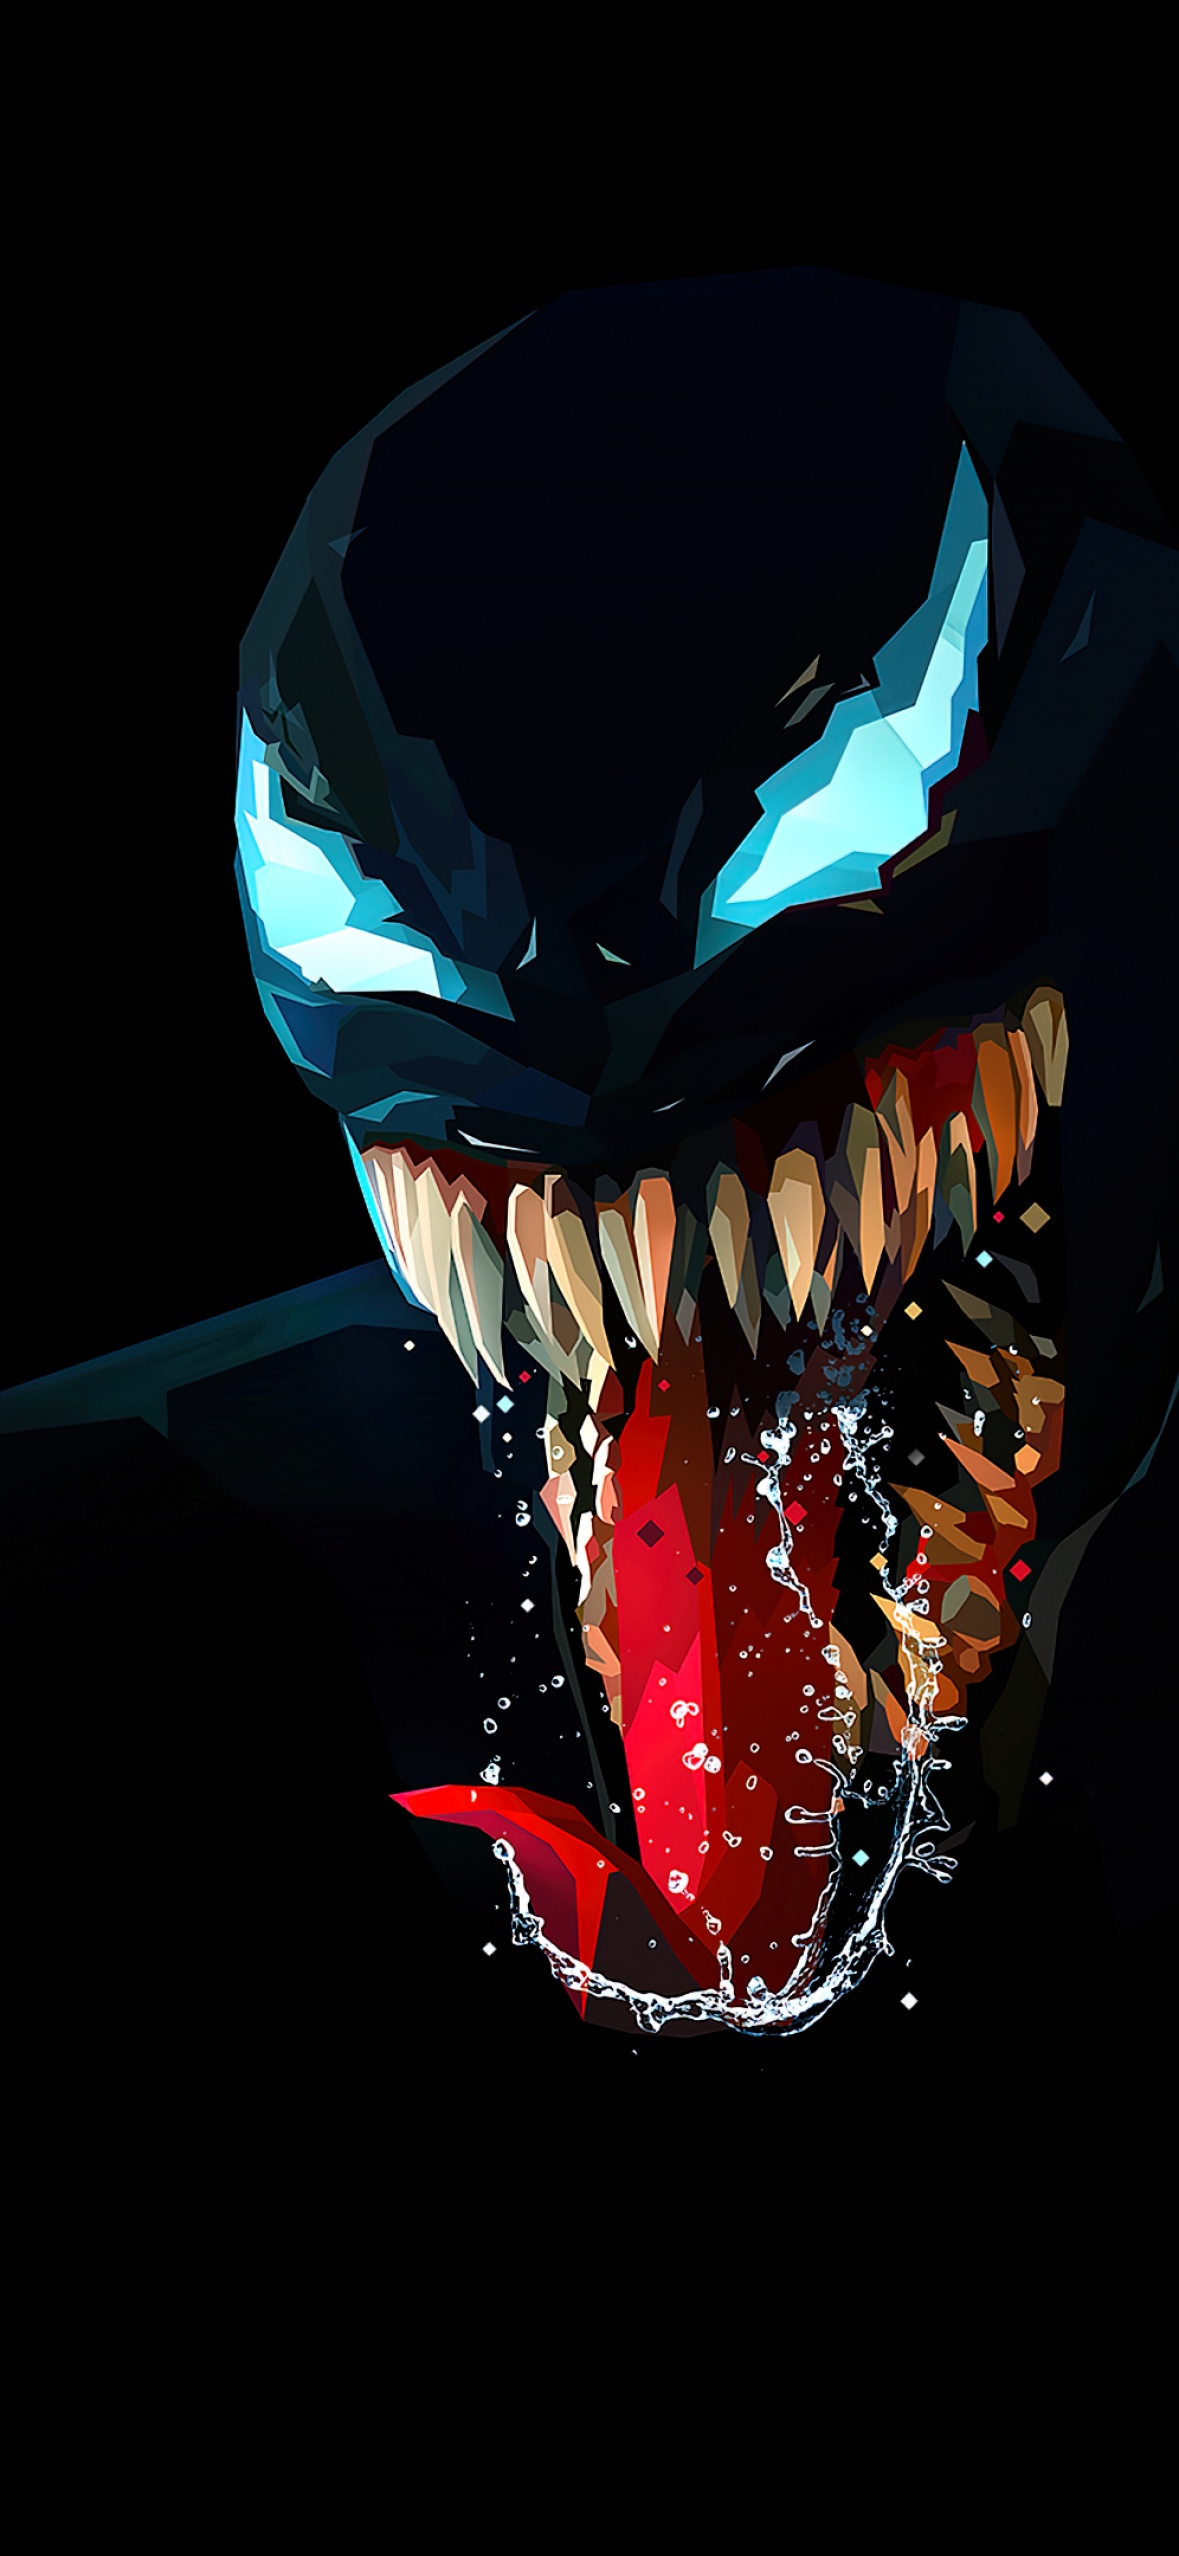 Venom Wallpaper 4K, Low poly, AMOLED, Graphics CGI, #6133